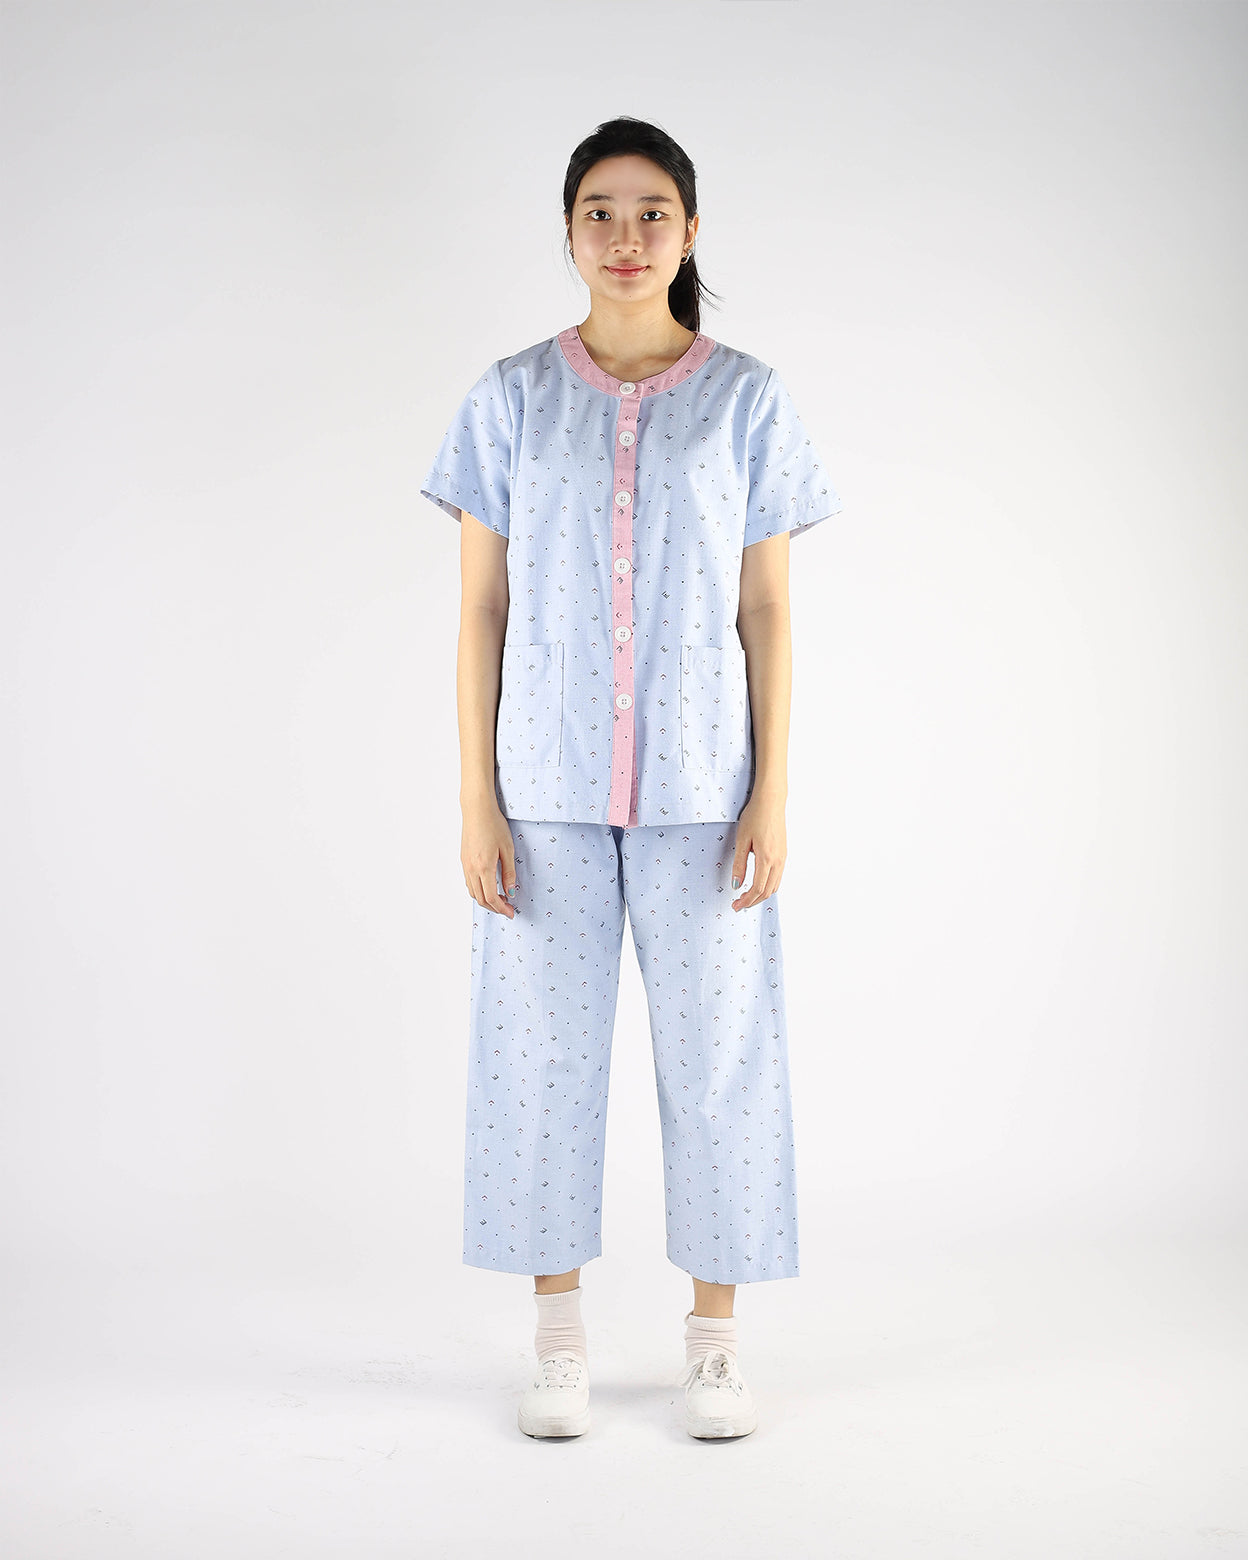 Hospital, Nursing Homes Pyjamas Uniform